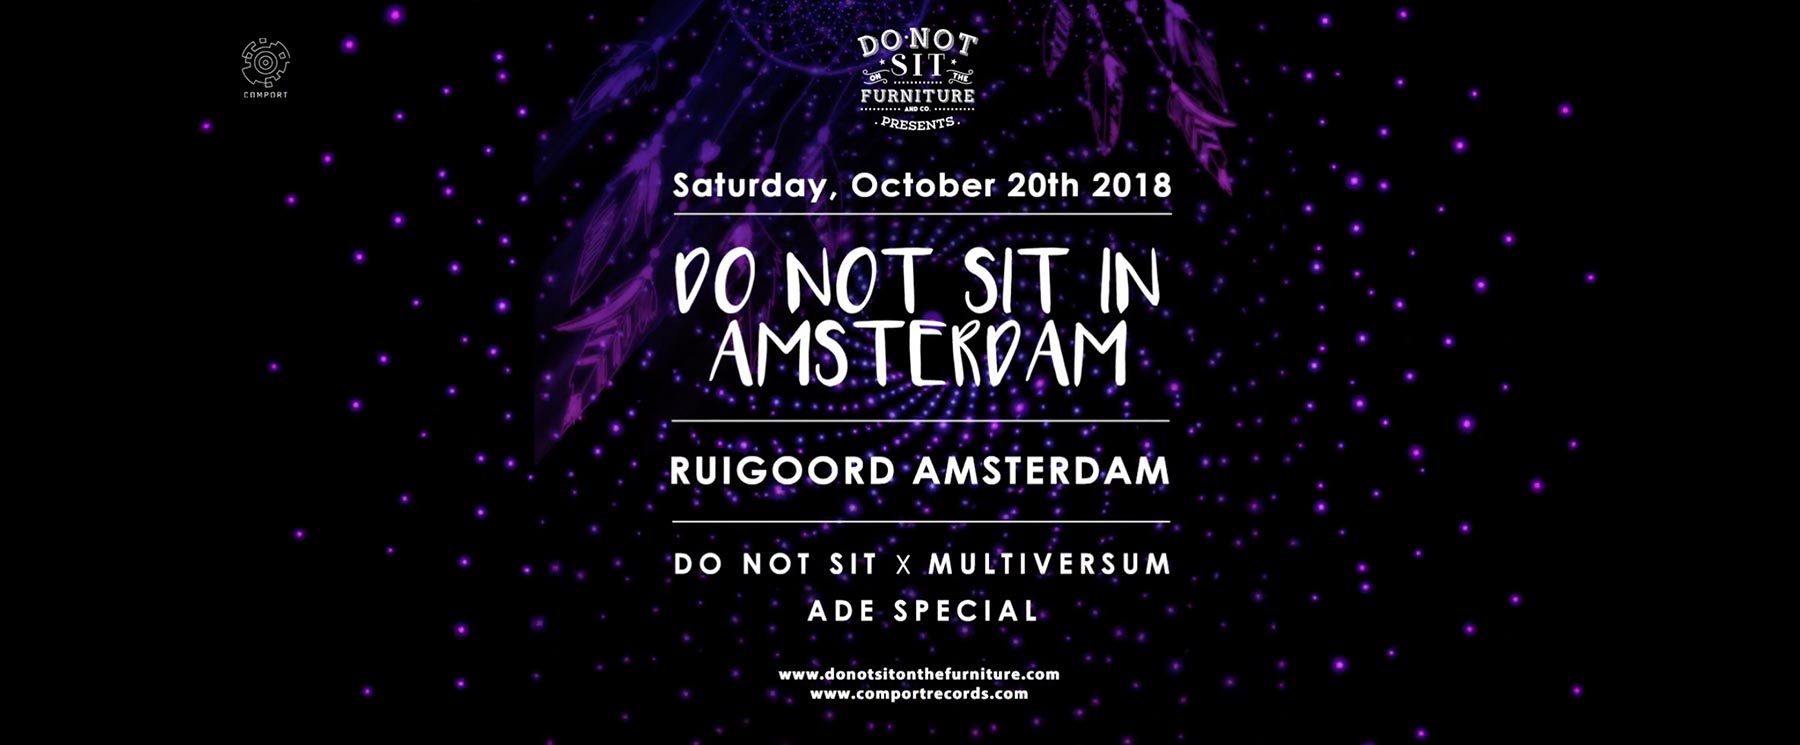 AMSTERDAM - Do Not Sit X Multiversum at ADE Festival